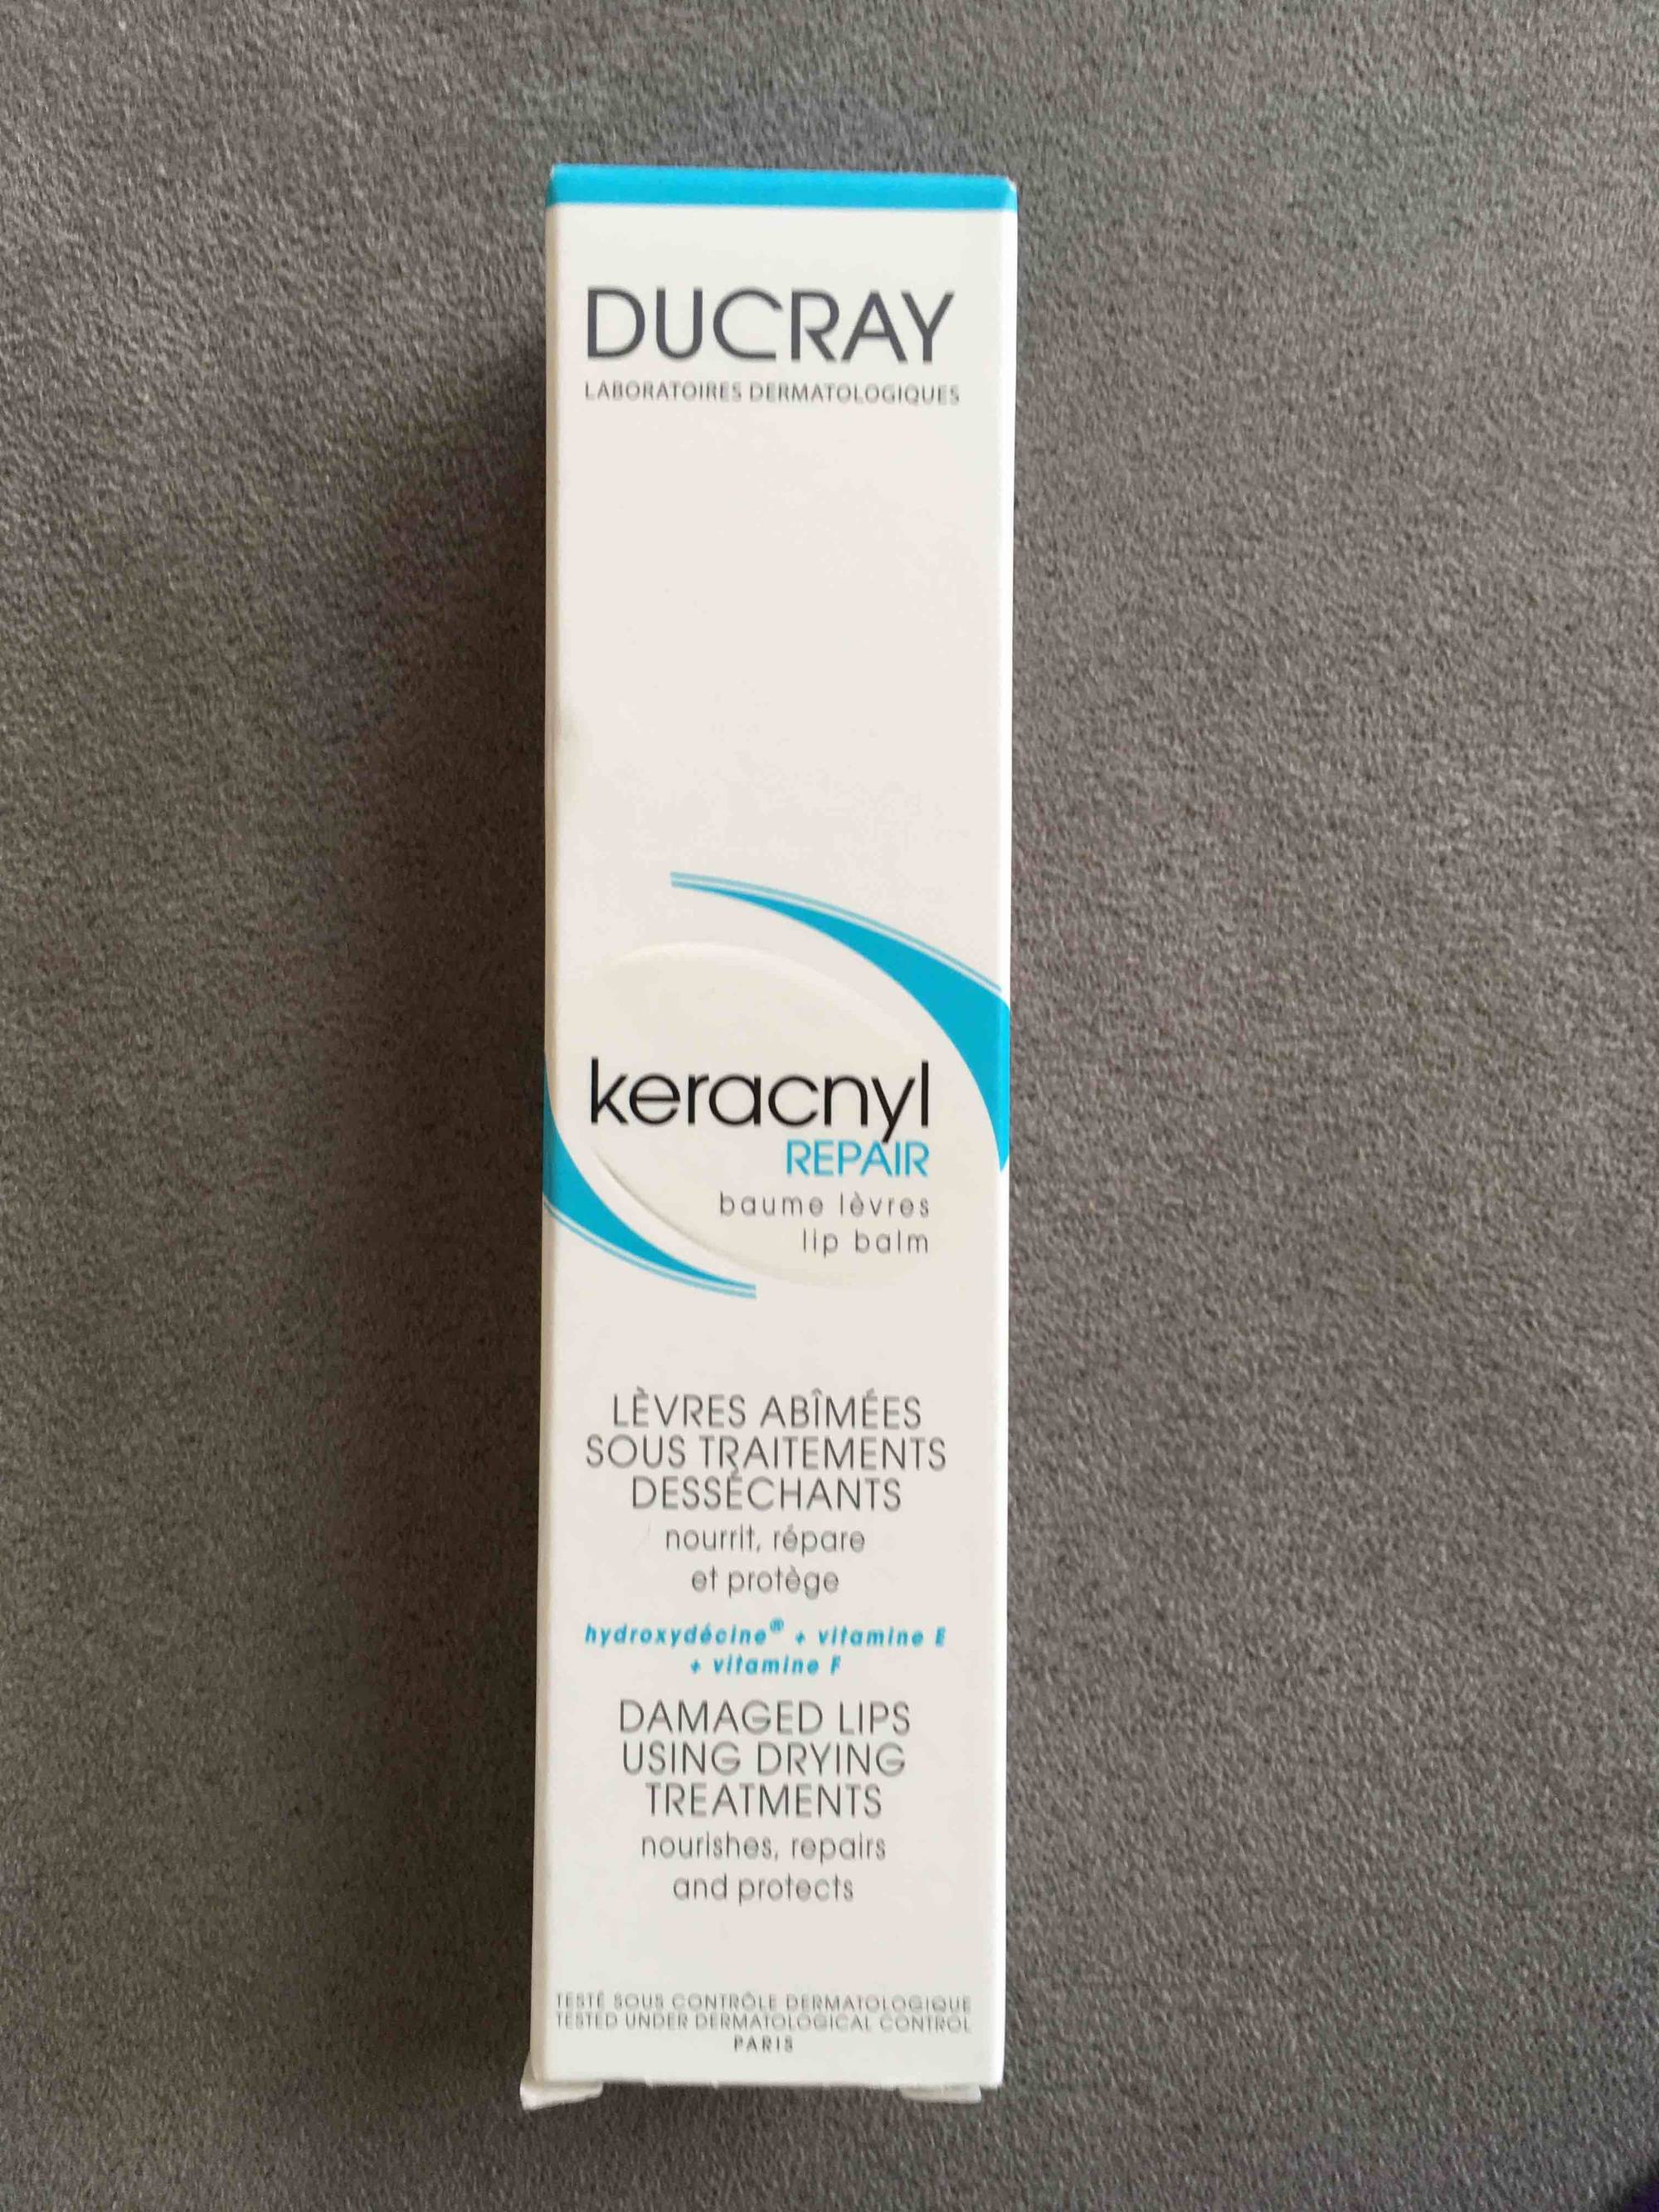 DUCRAY - Keracnyl - Baume lèvres